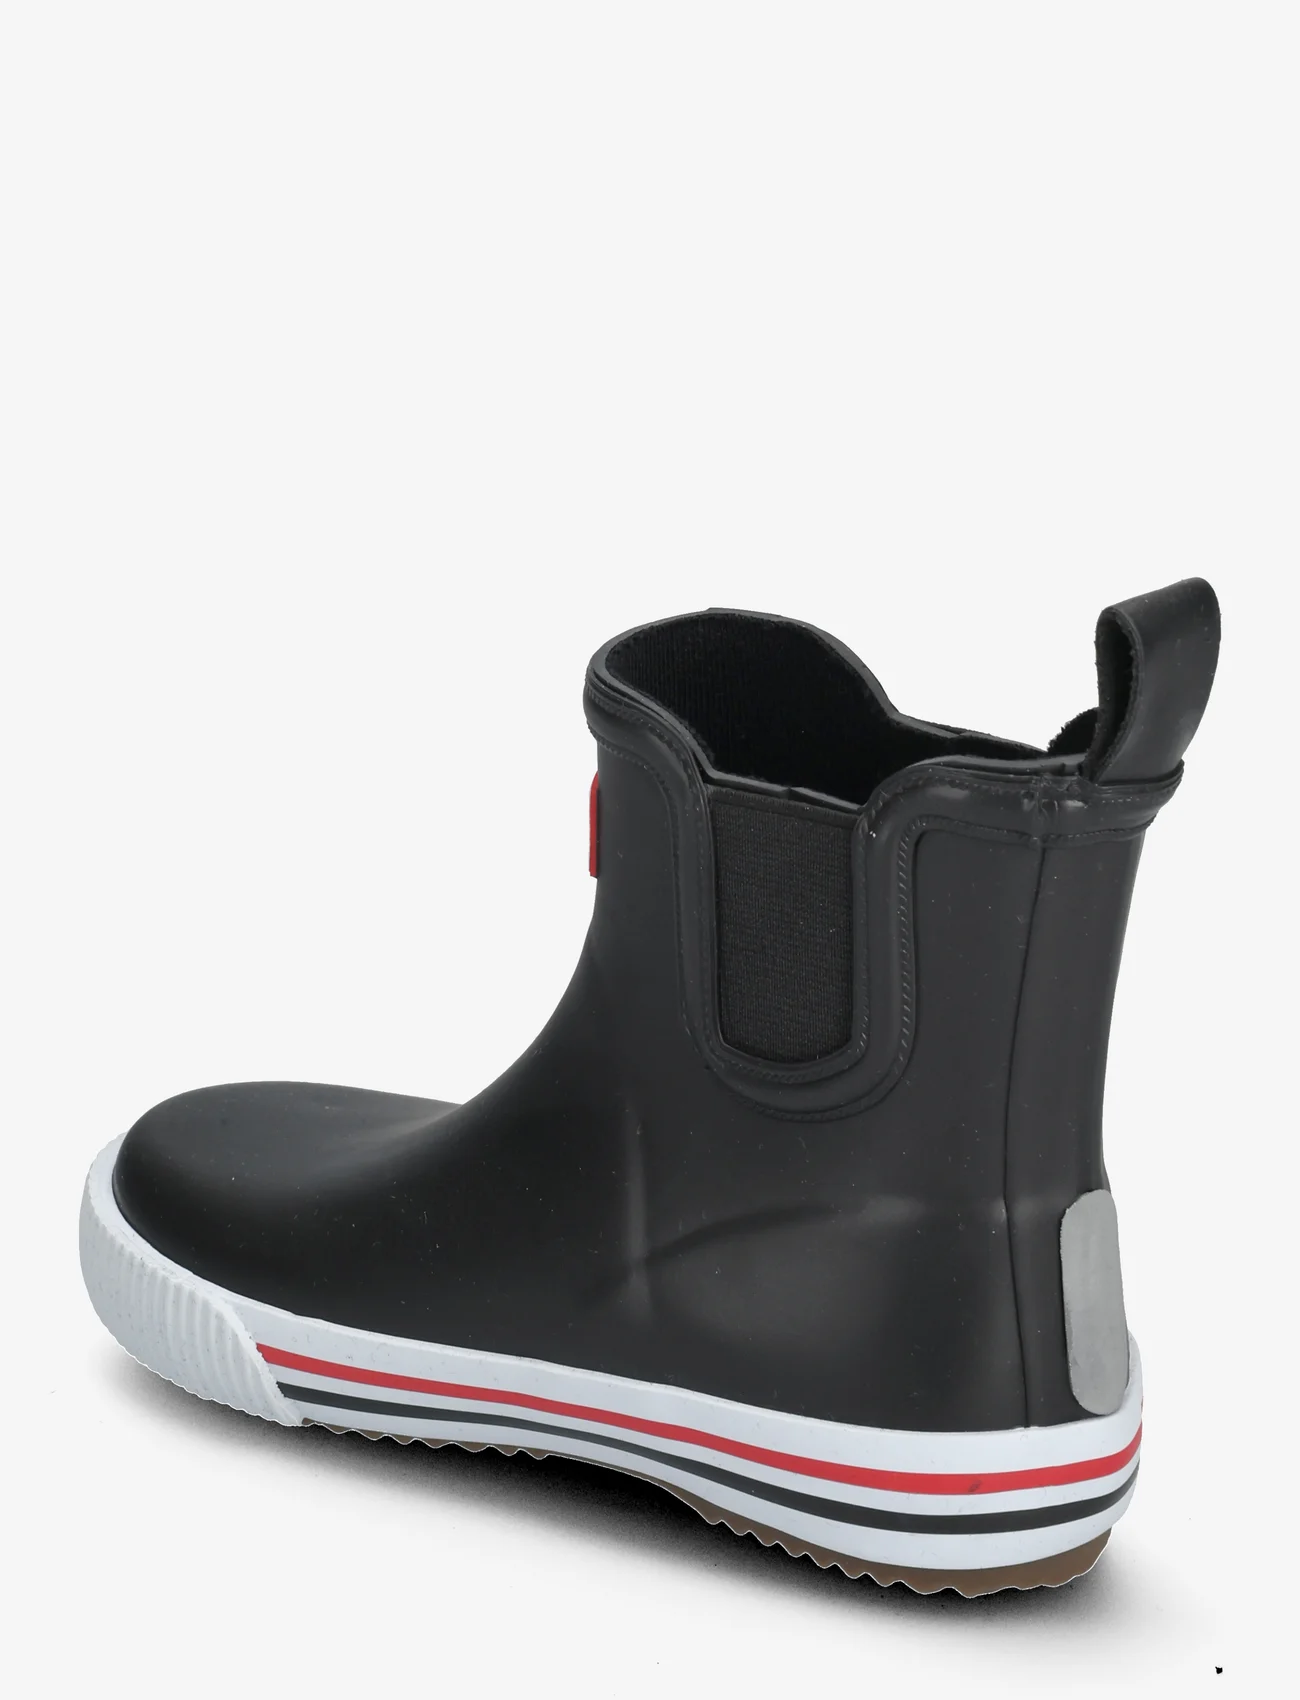 Reima - Rain boots, Ankles - ungefütterte gummistiefel - black - 1